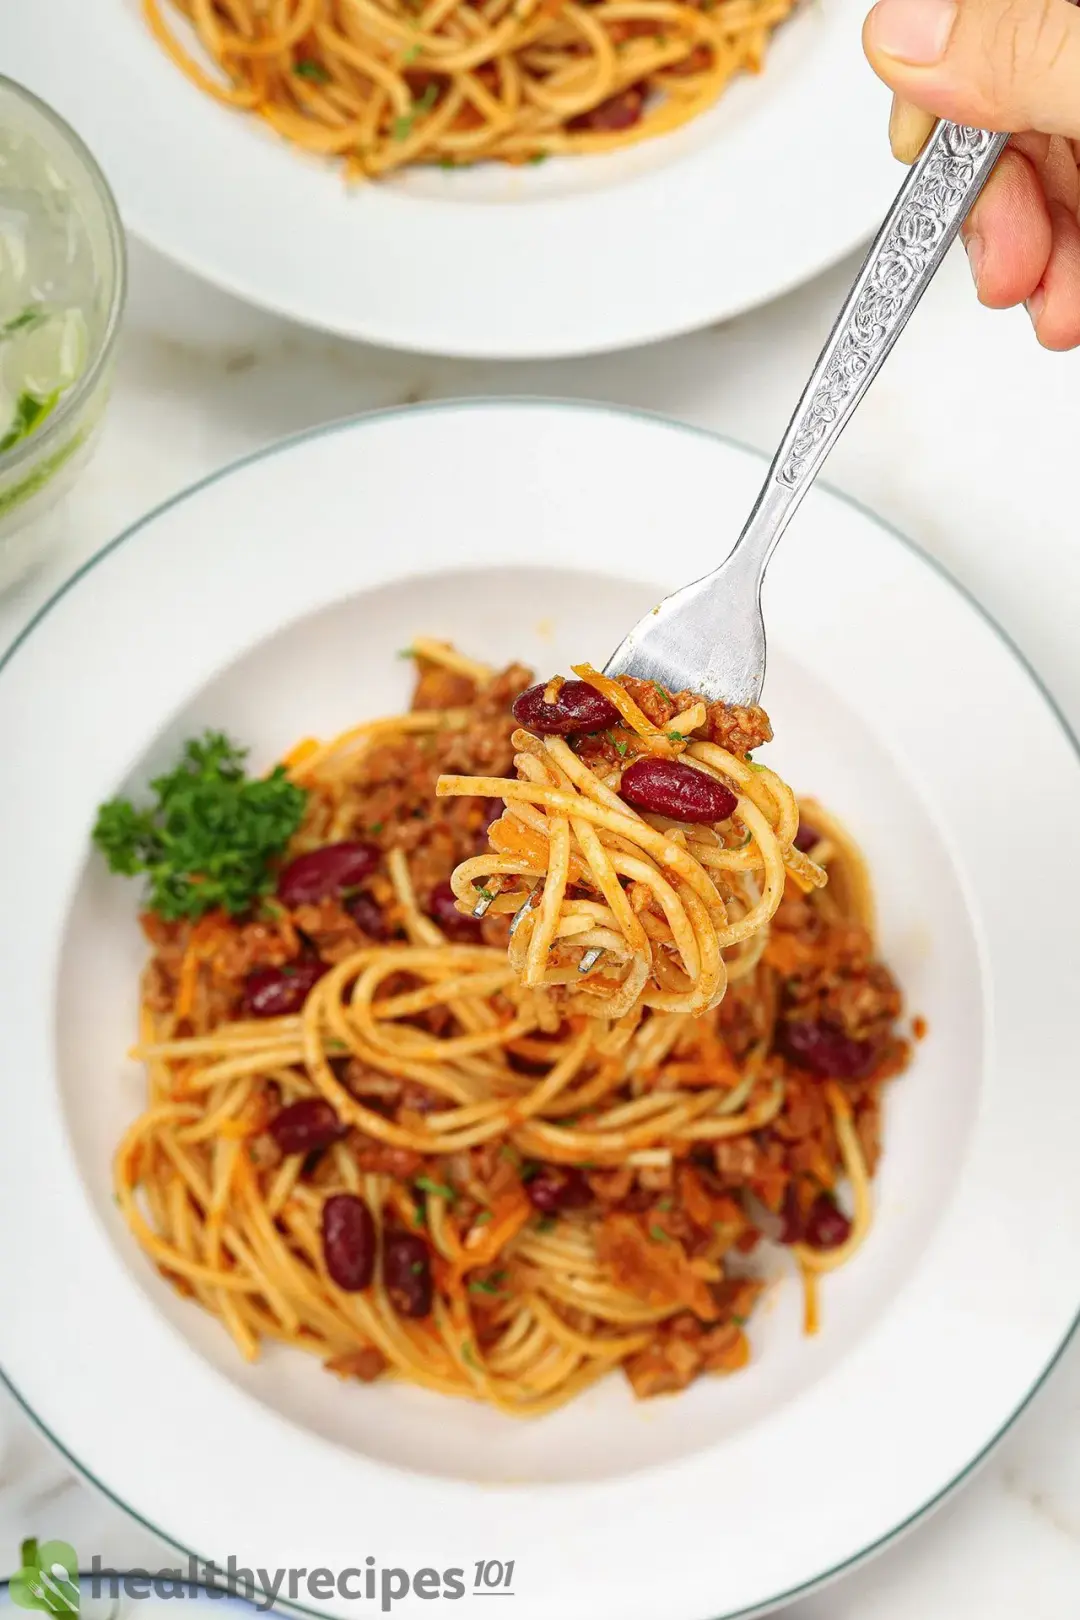 how to cook spaghetti for chili spaghetti